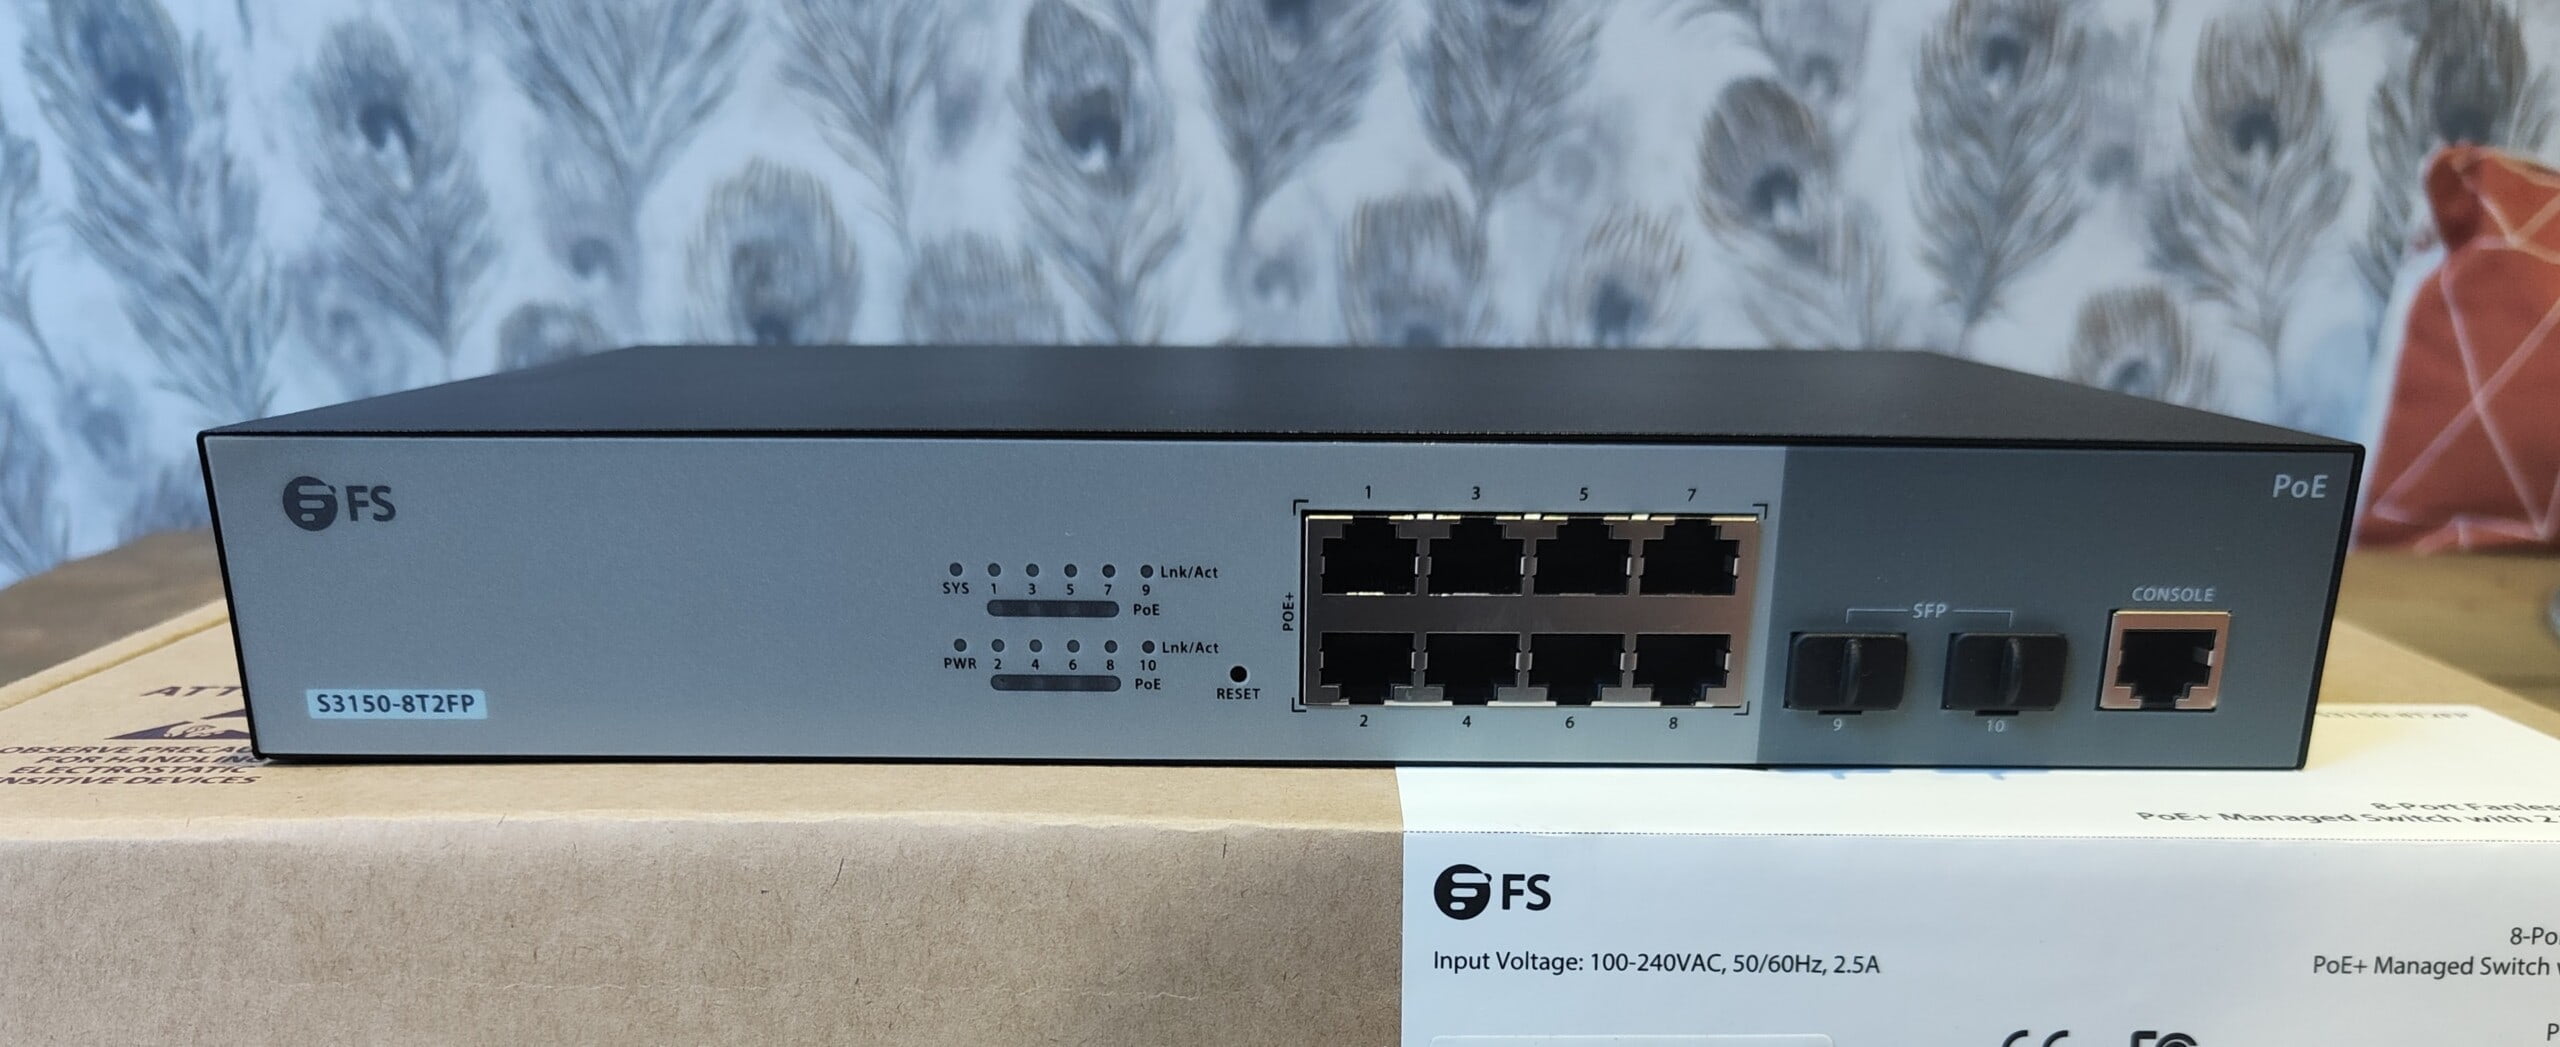 FS.com S3150-8T2FP 8-Port Gigabit POE Fanless Switch Review (130W + 2 x 1Gb SFP)